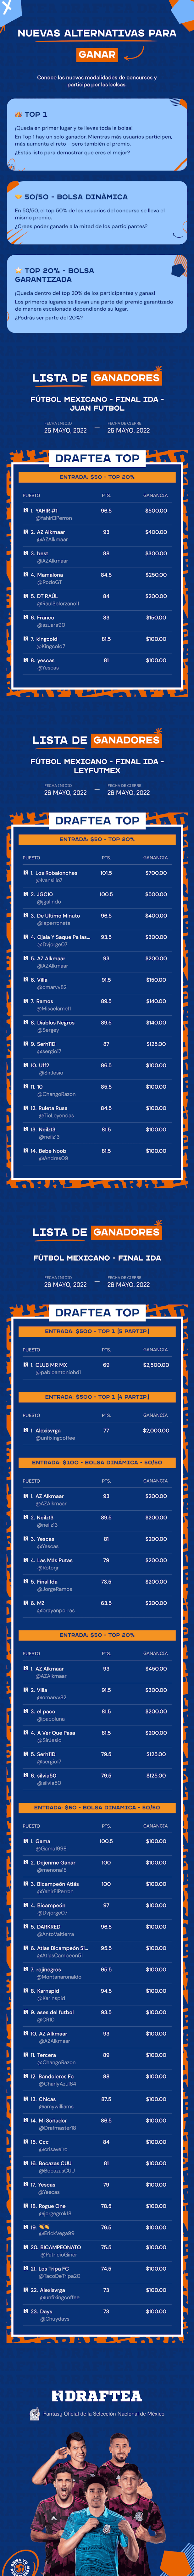 lista de ganadores mobile - futbol mexicano final ida